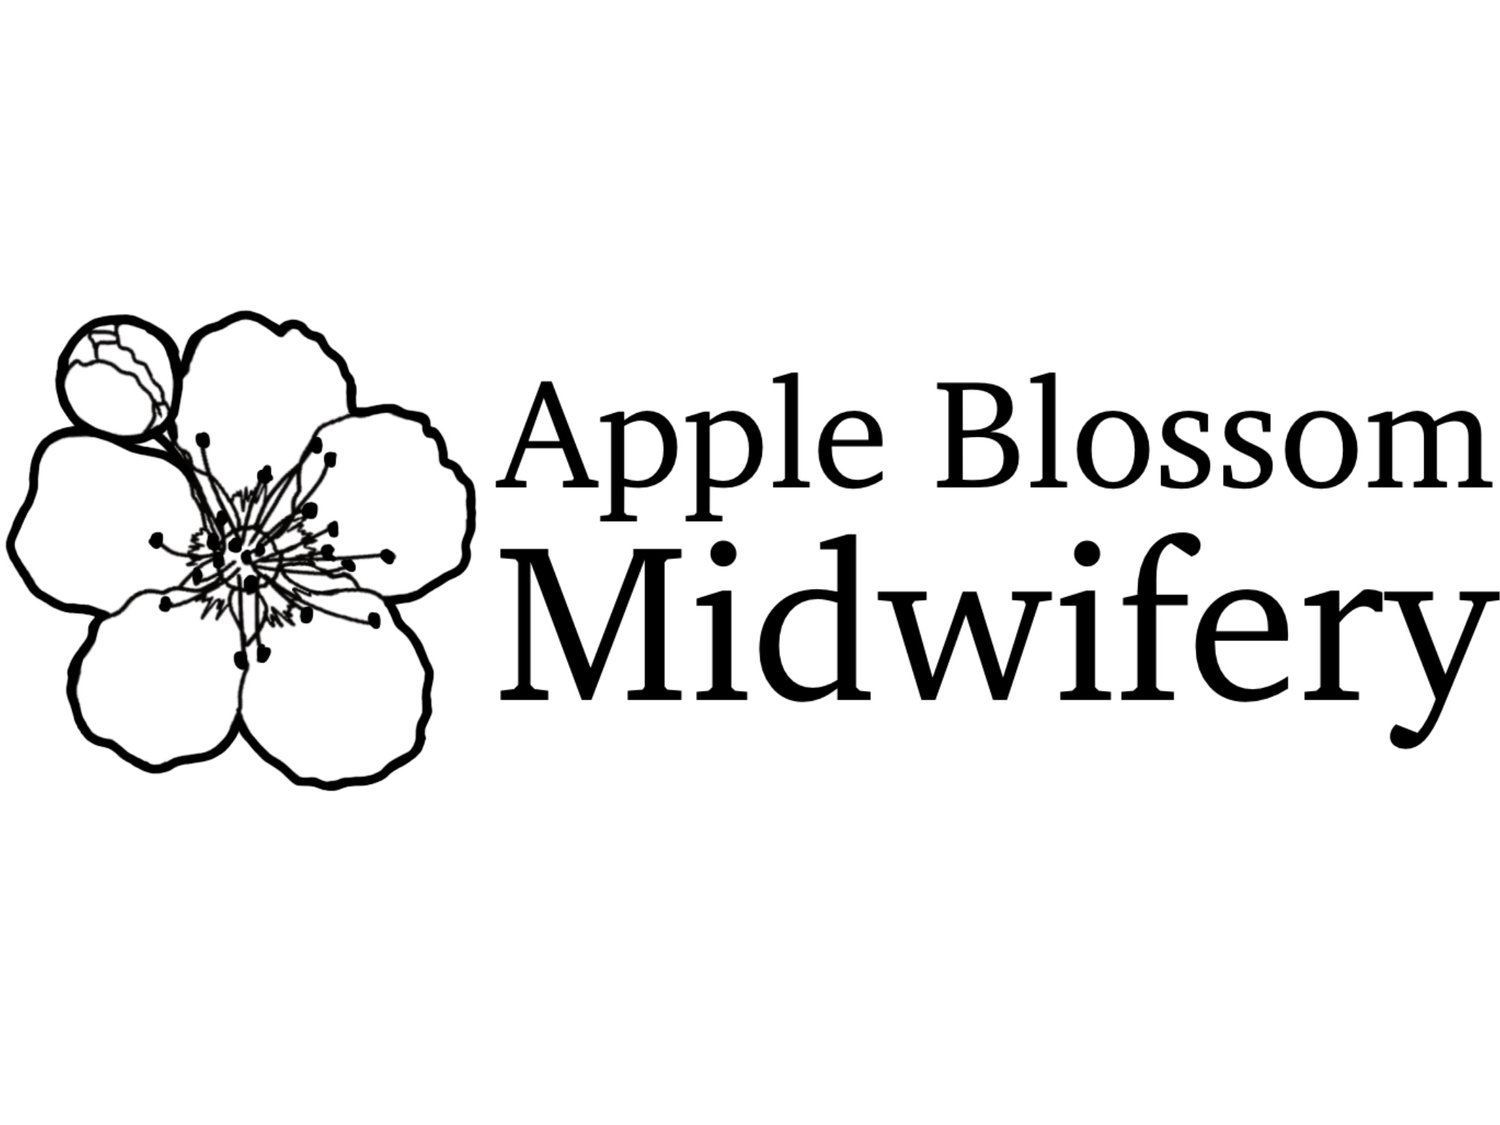 Apple Blossom Midwifery